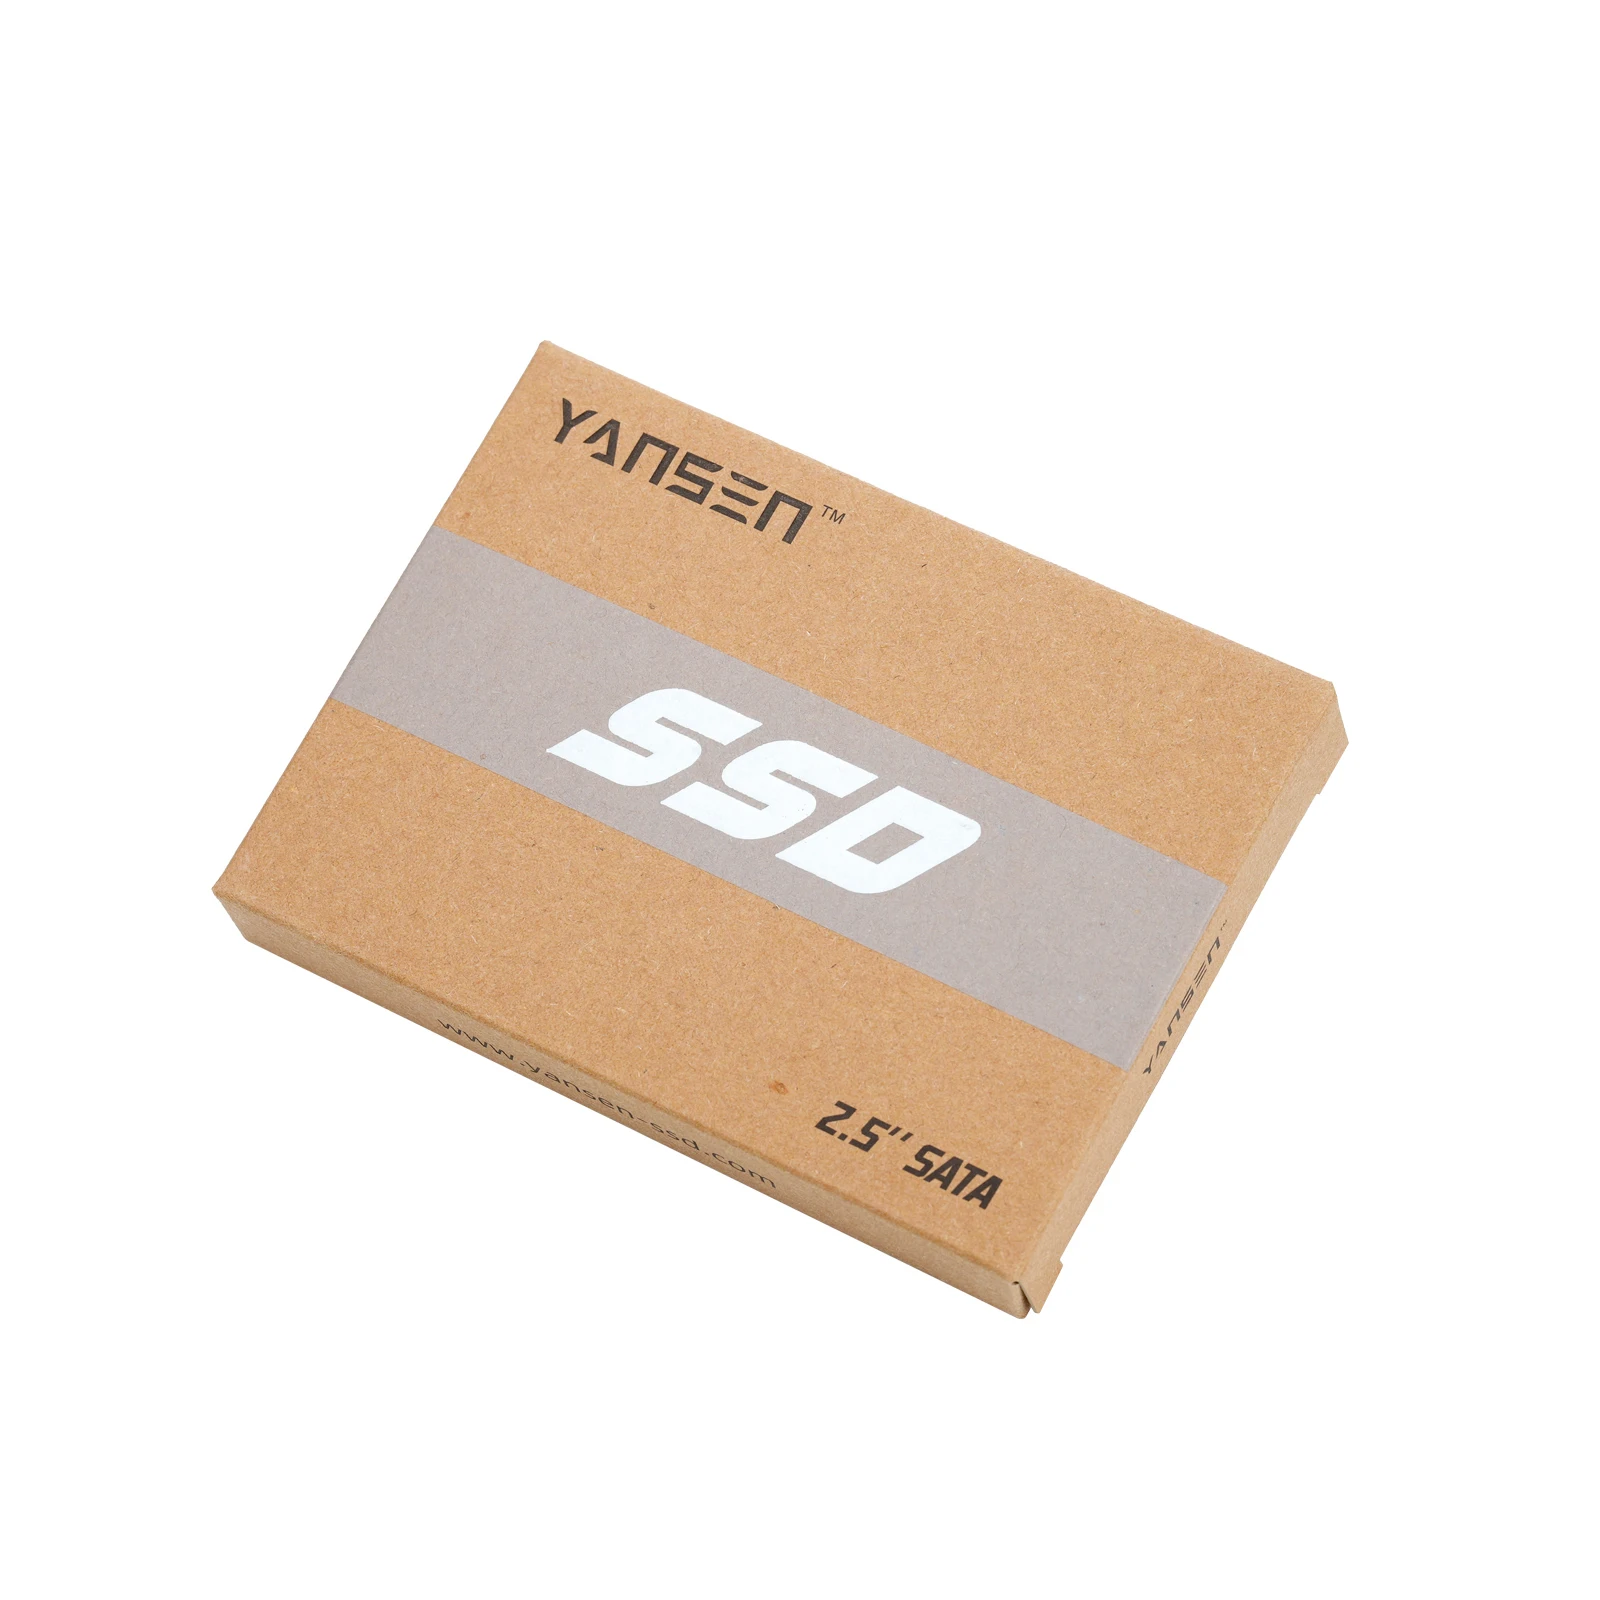  KingSpec 32GB 2.5 inch PATA/IDE SSD, MLC Flash SM2236